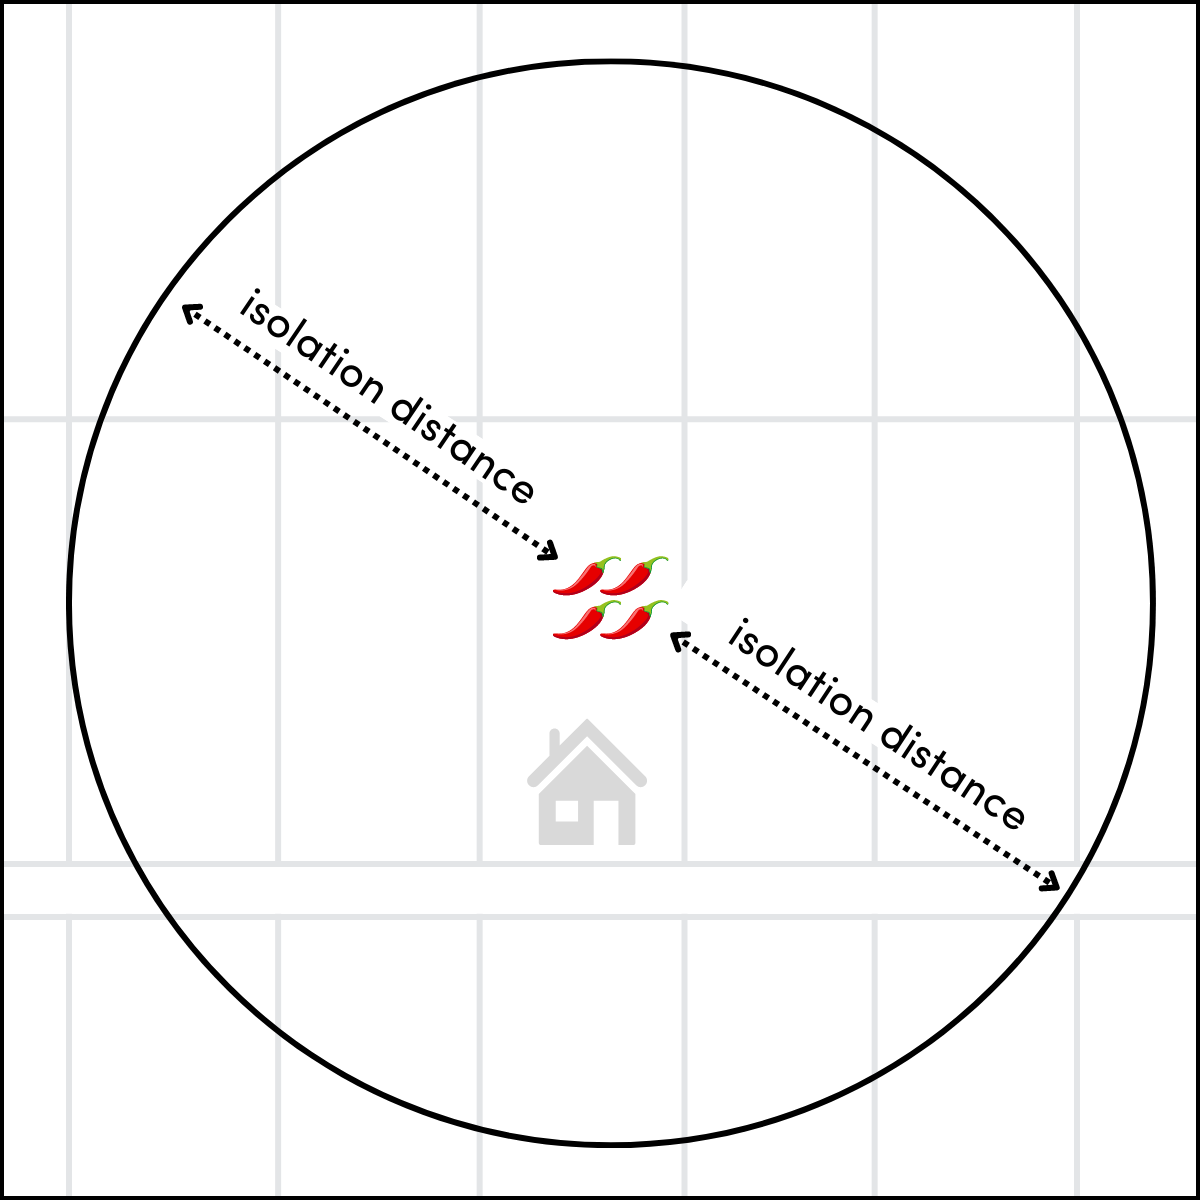 Isolation distance diagram